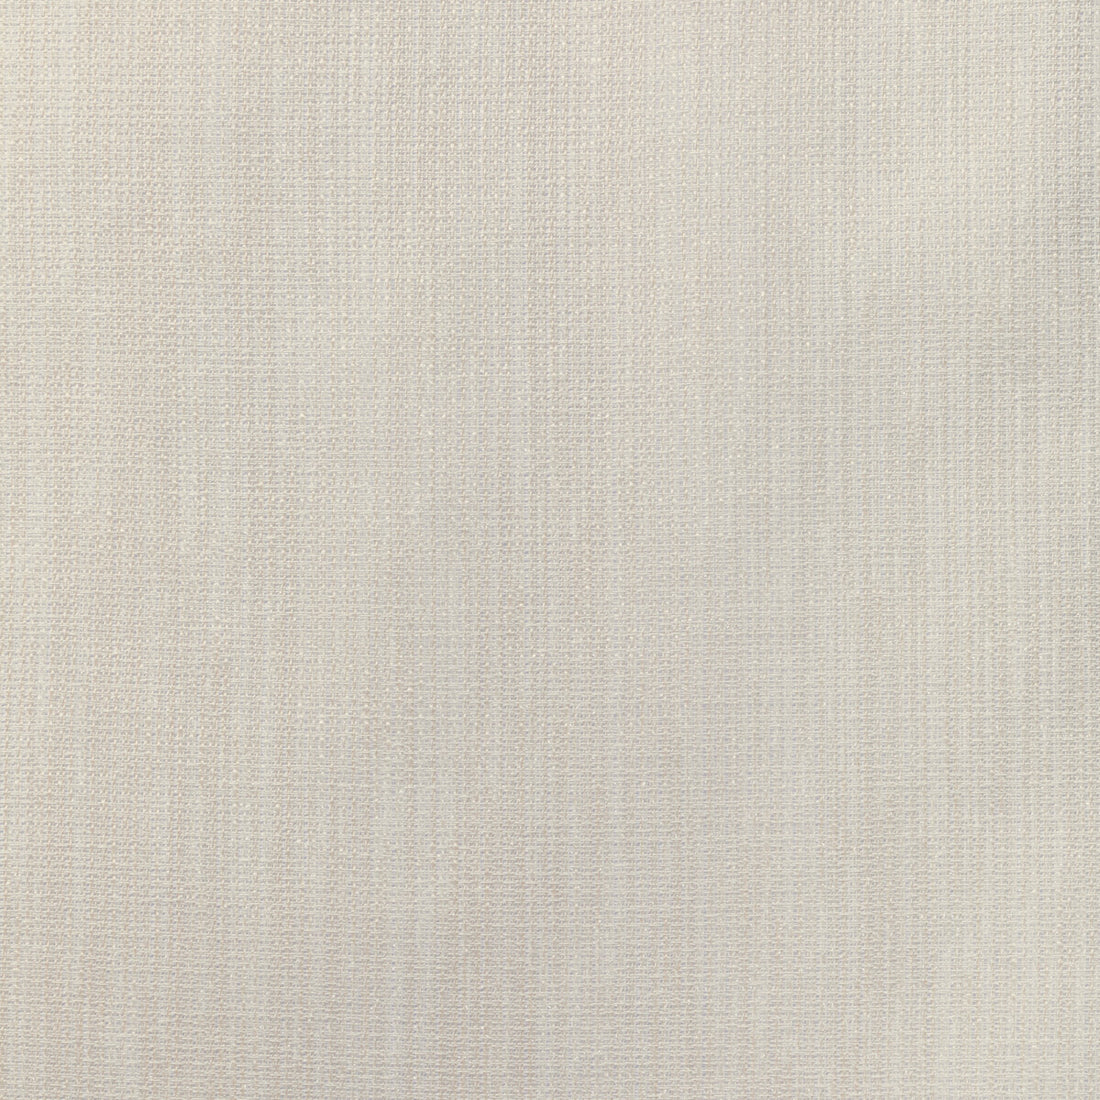 Kravet Basics fabric in 4502-116 color - pattern 4502.116.0 - by Kravet Basics in the Sheer Outlook collection